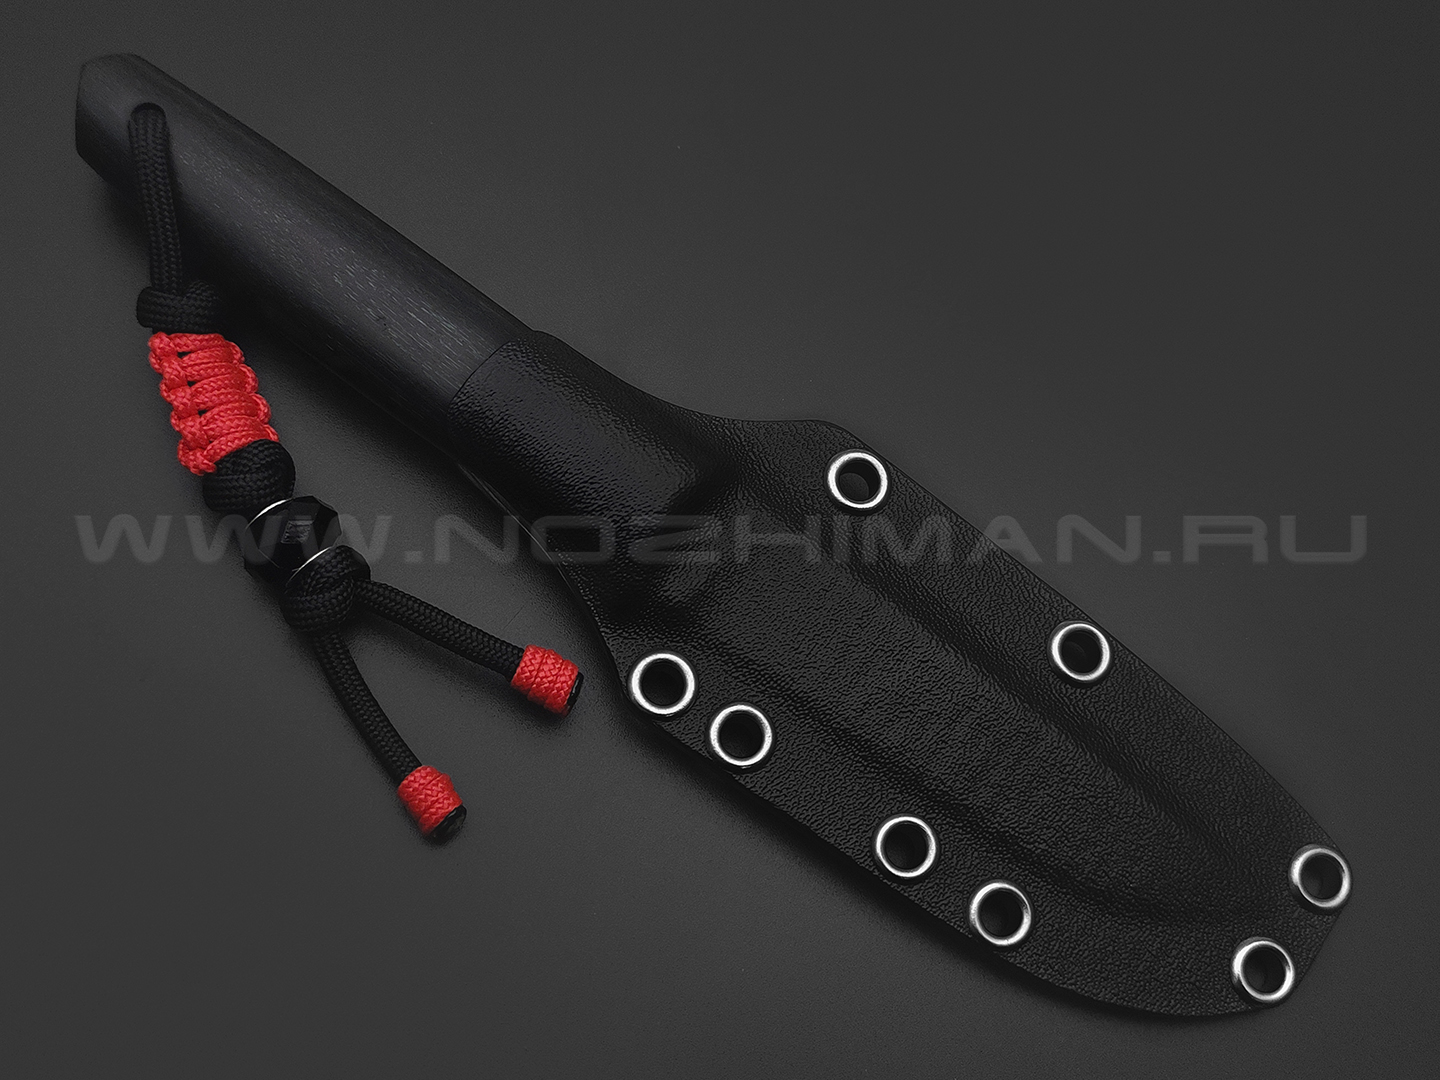 Волчий Век нож Слоненок Custom сталь CPM S125V WA satin, рукоять Black wood, позвонок кита, carbon fiber